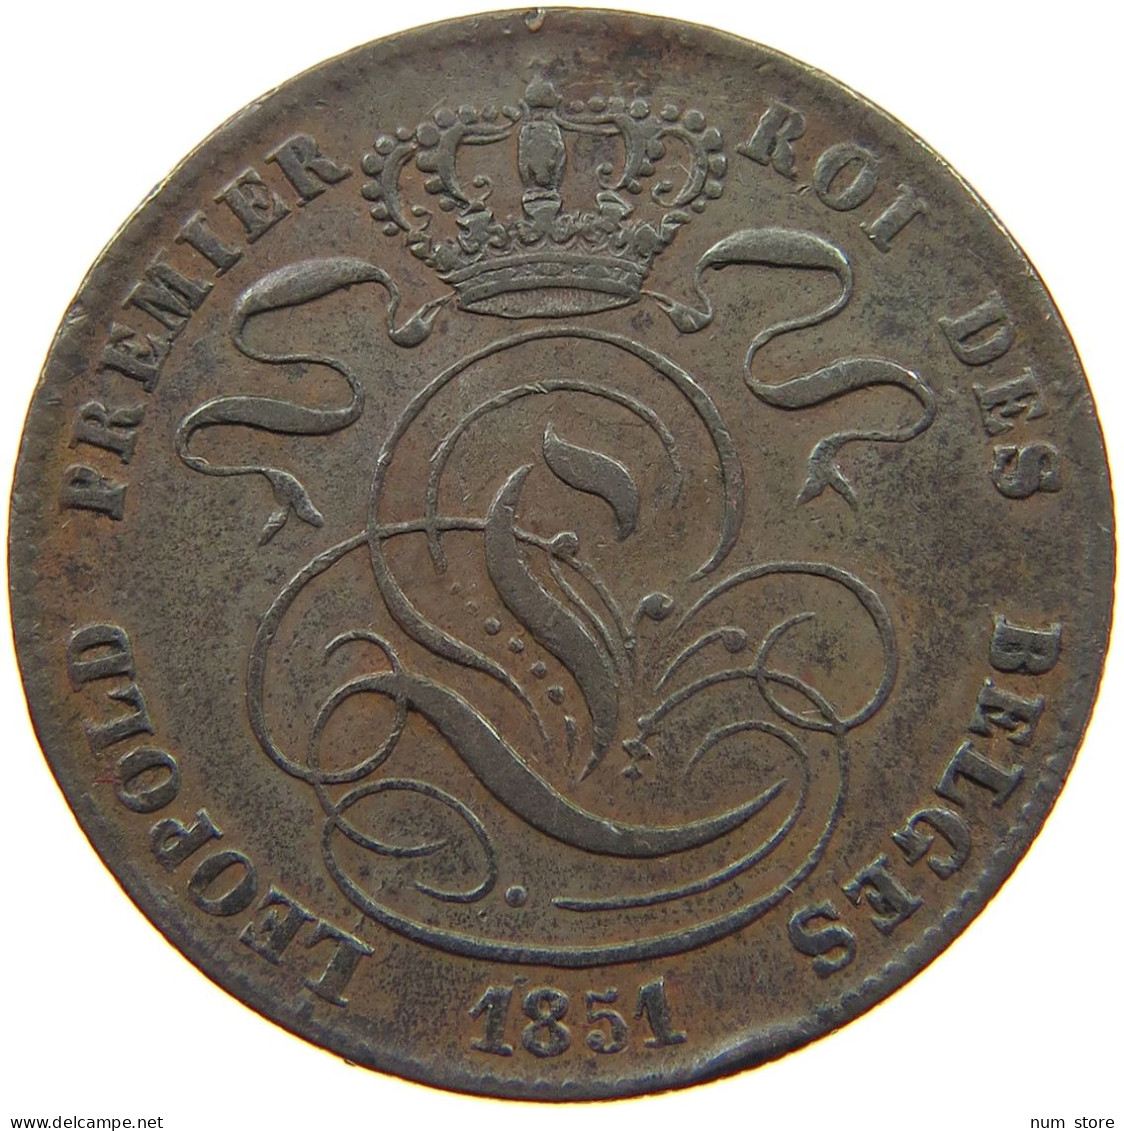 BELGIUM 5 CENTIMES 1851  #t132 0599 - 5 Cents